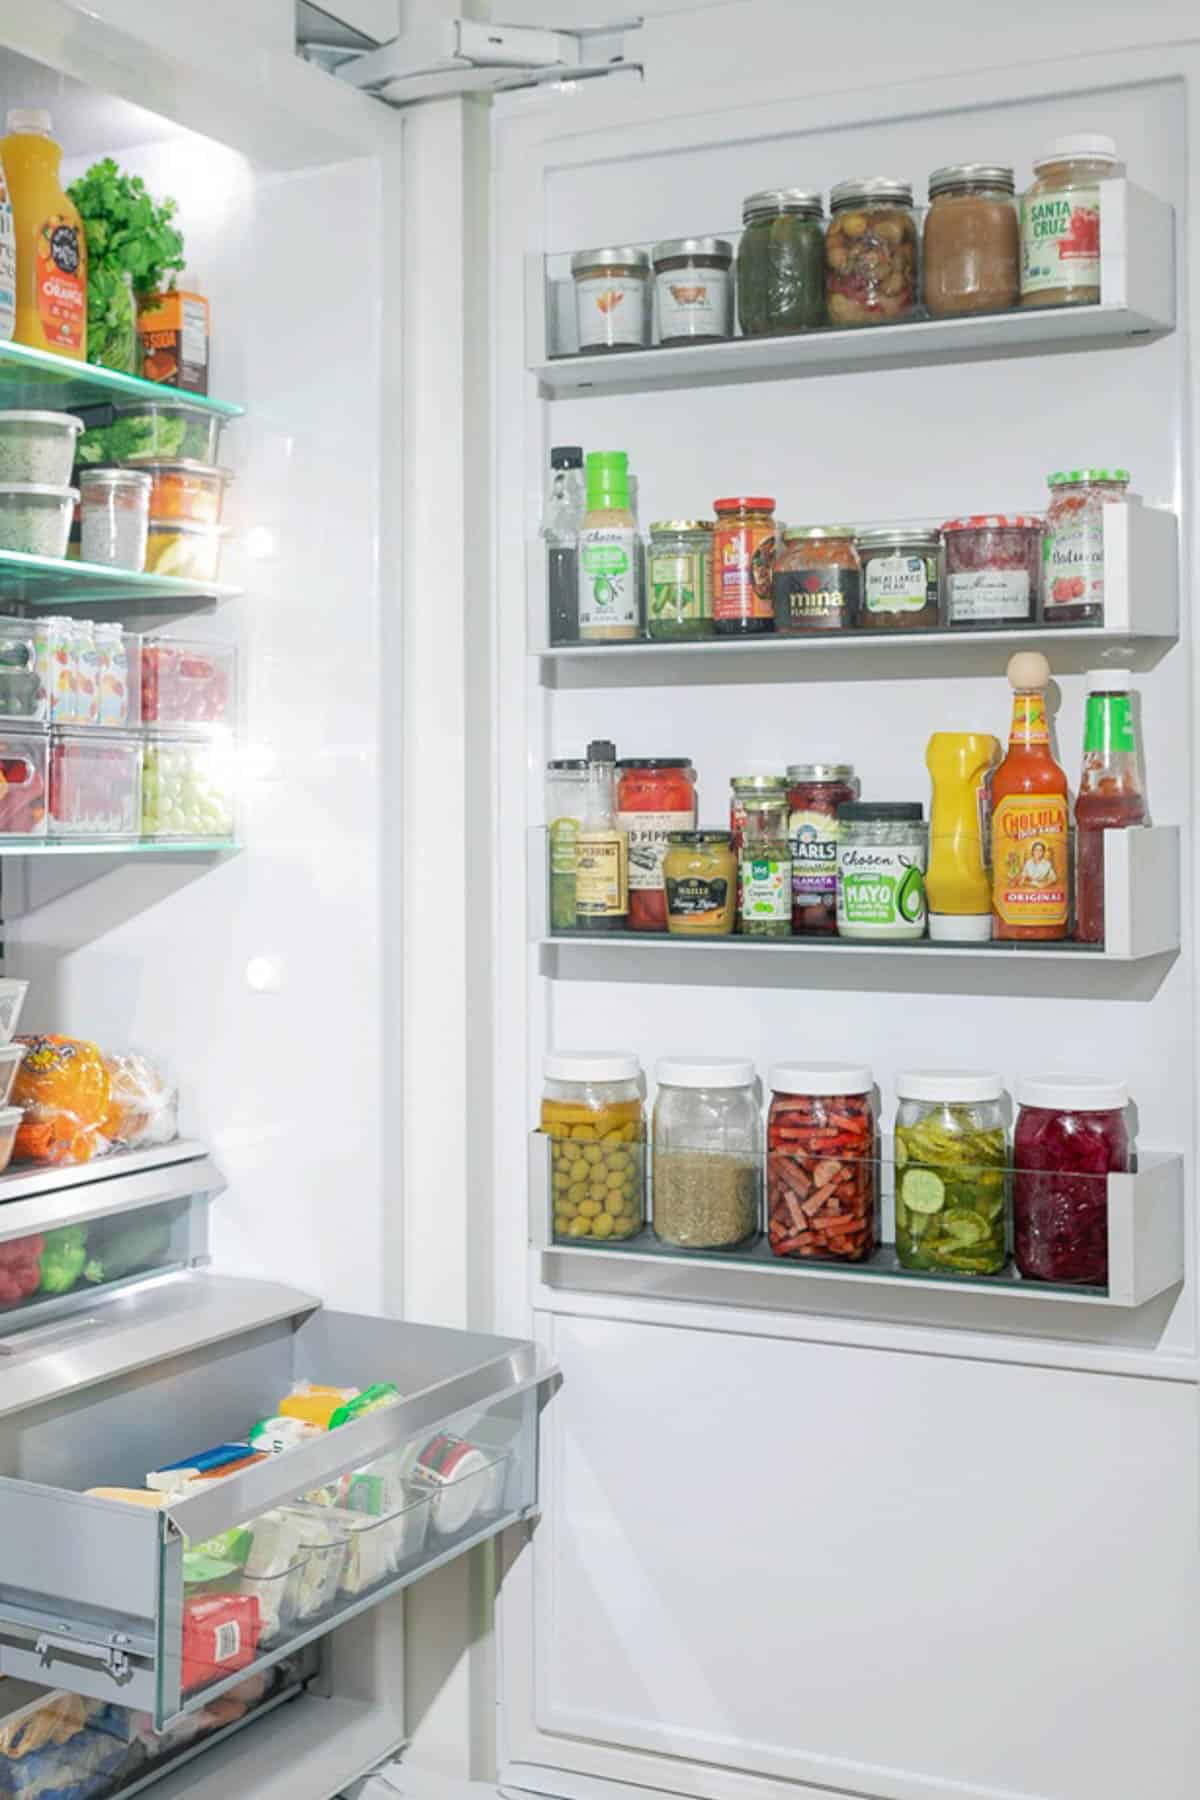 How to organize your fridge, door section